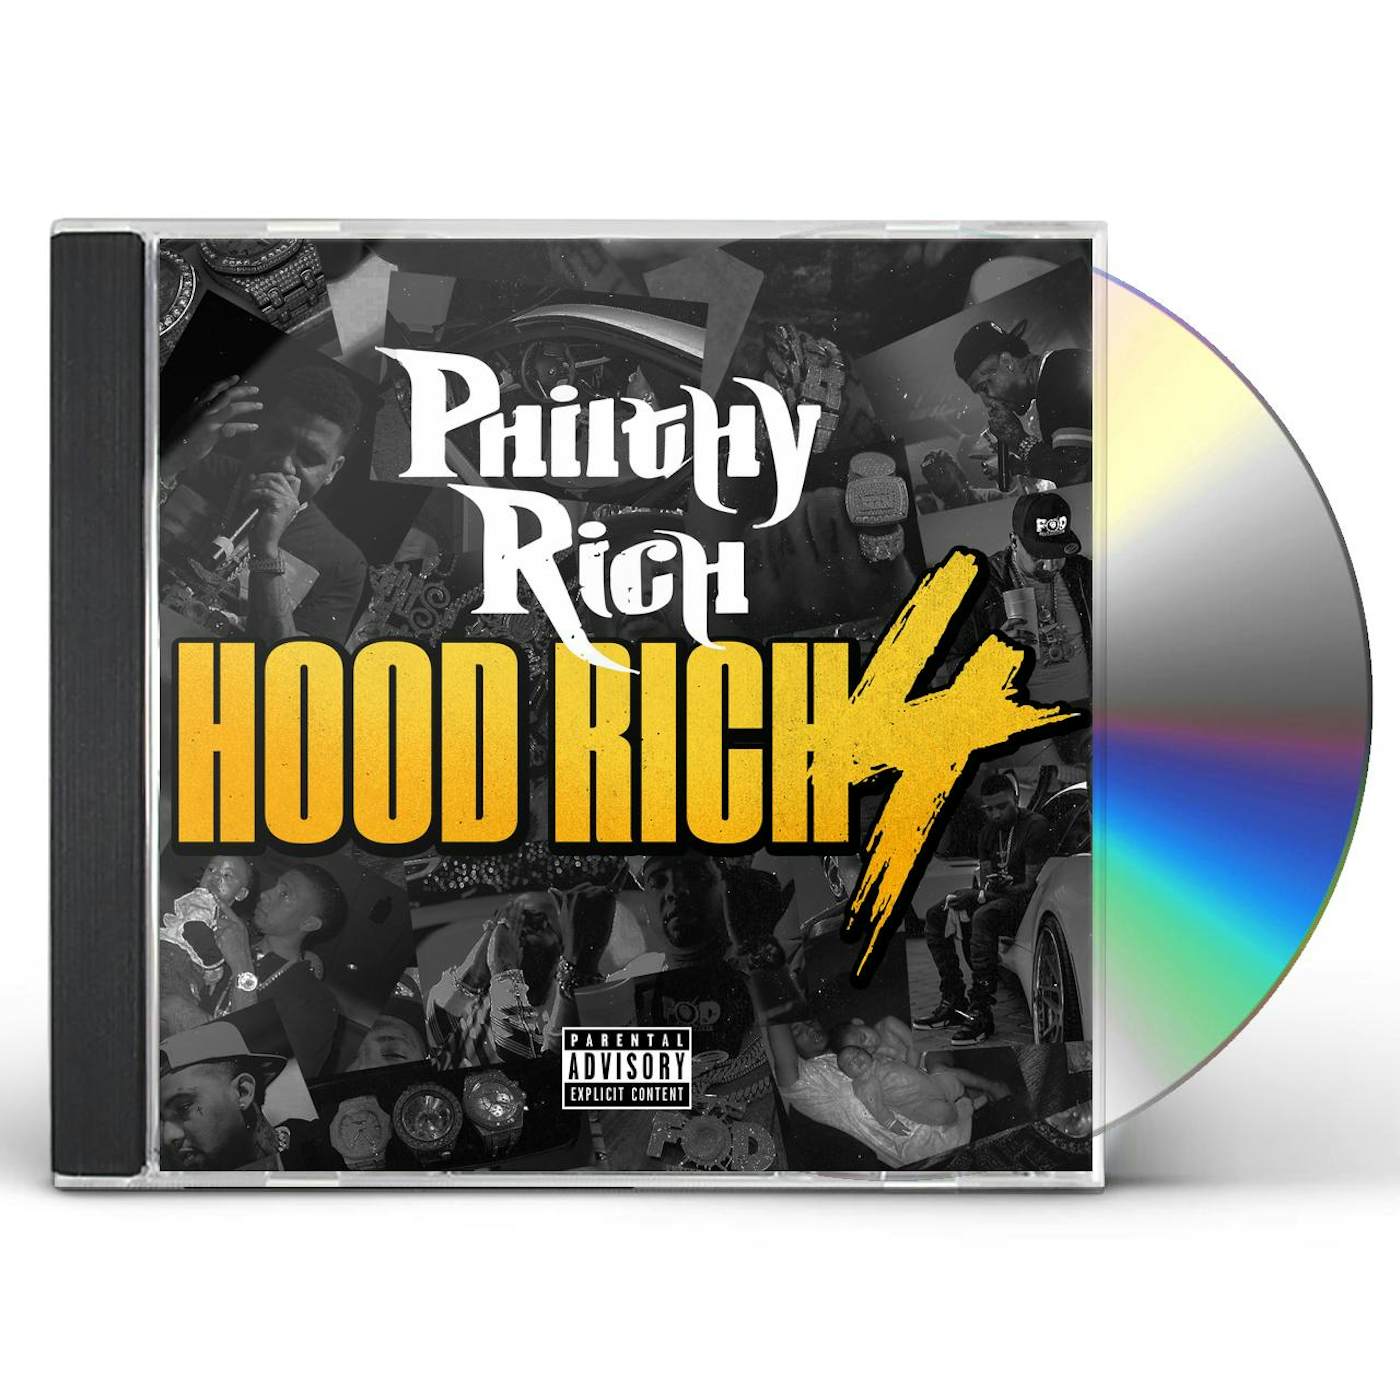 Philthy Rich HOOD RICH 4 CD